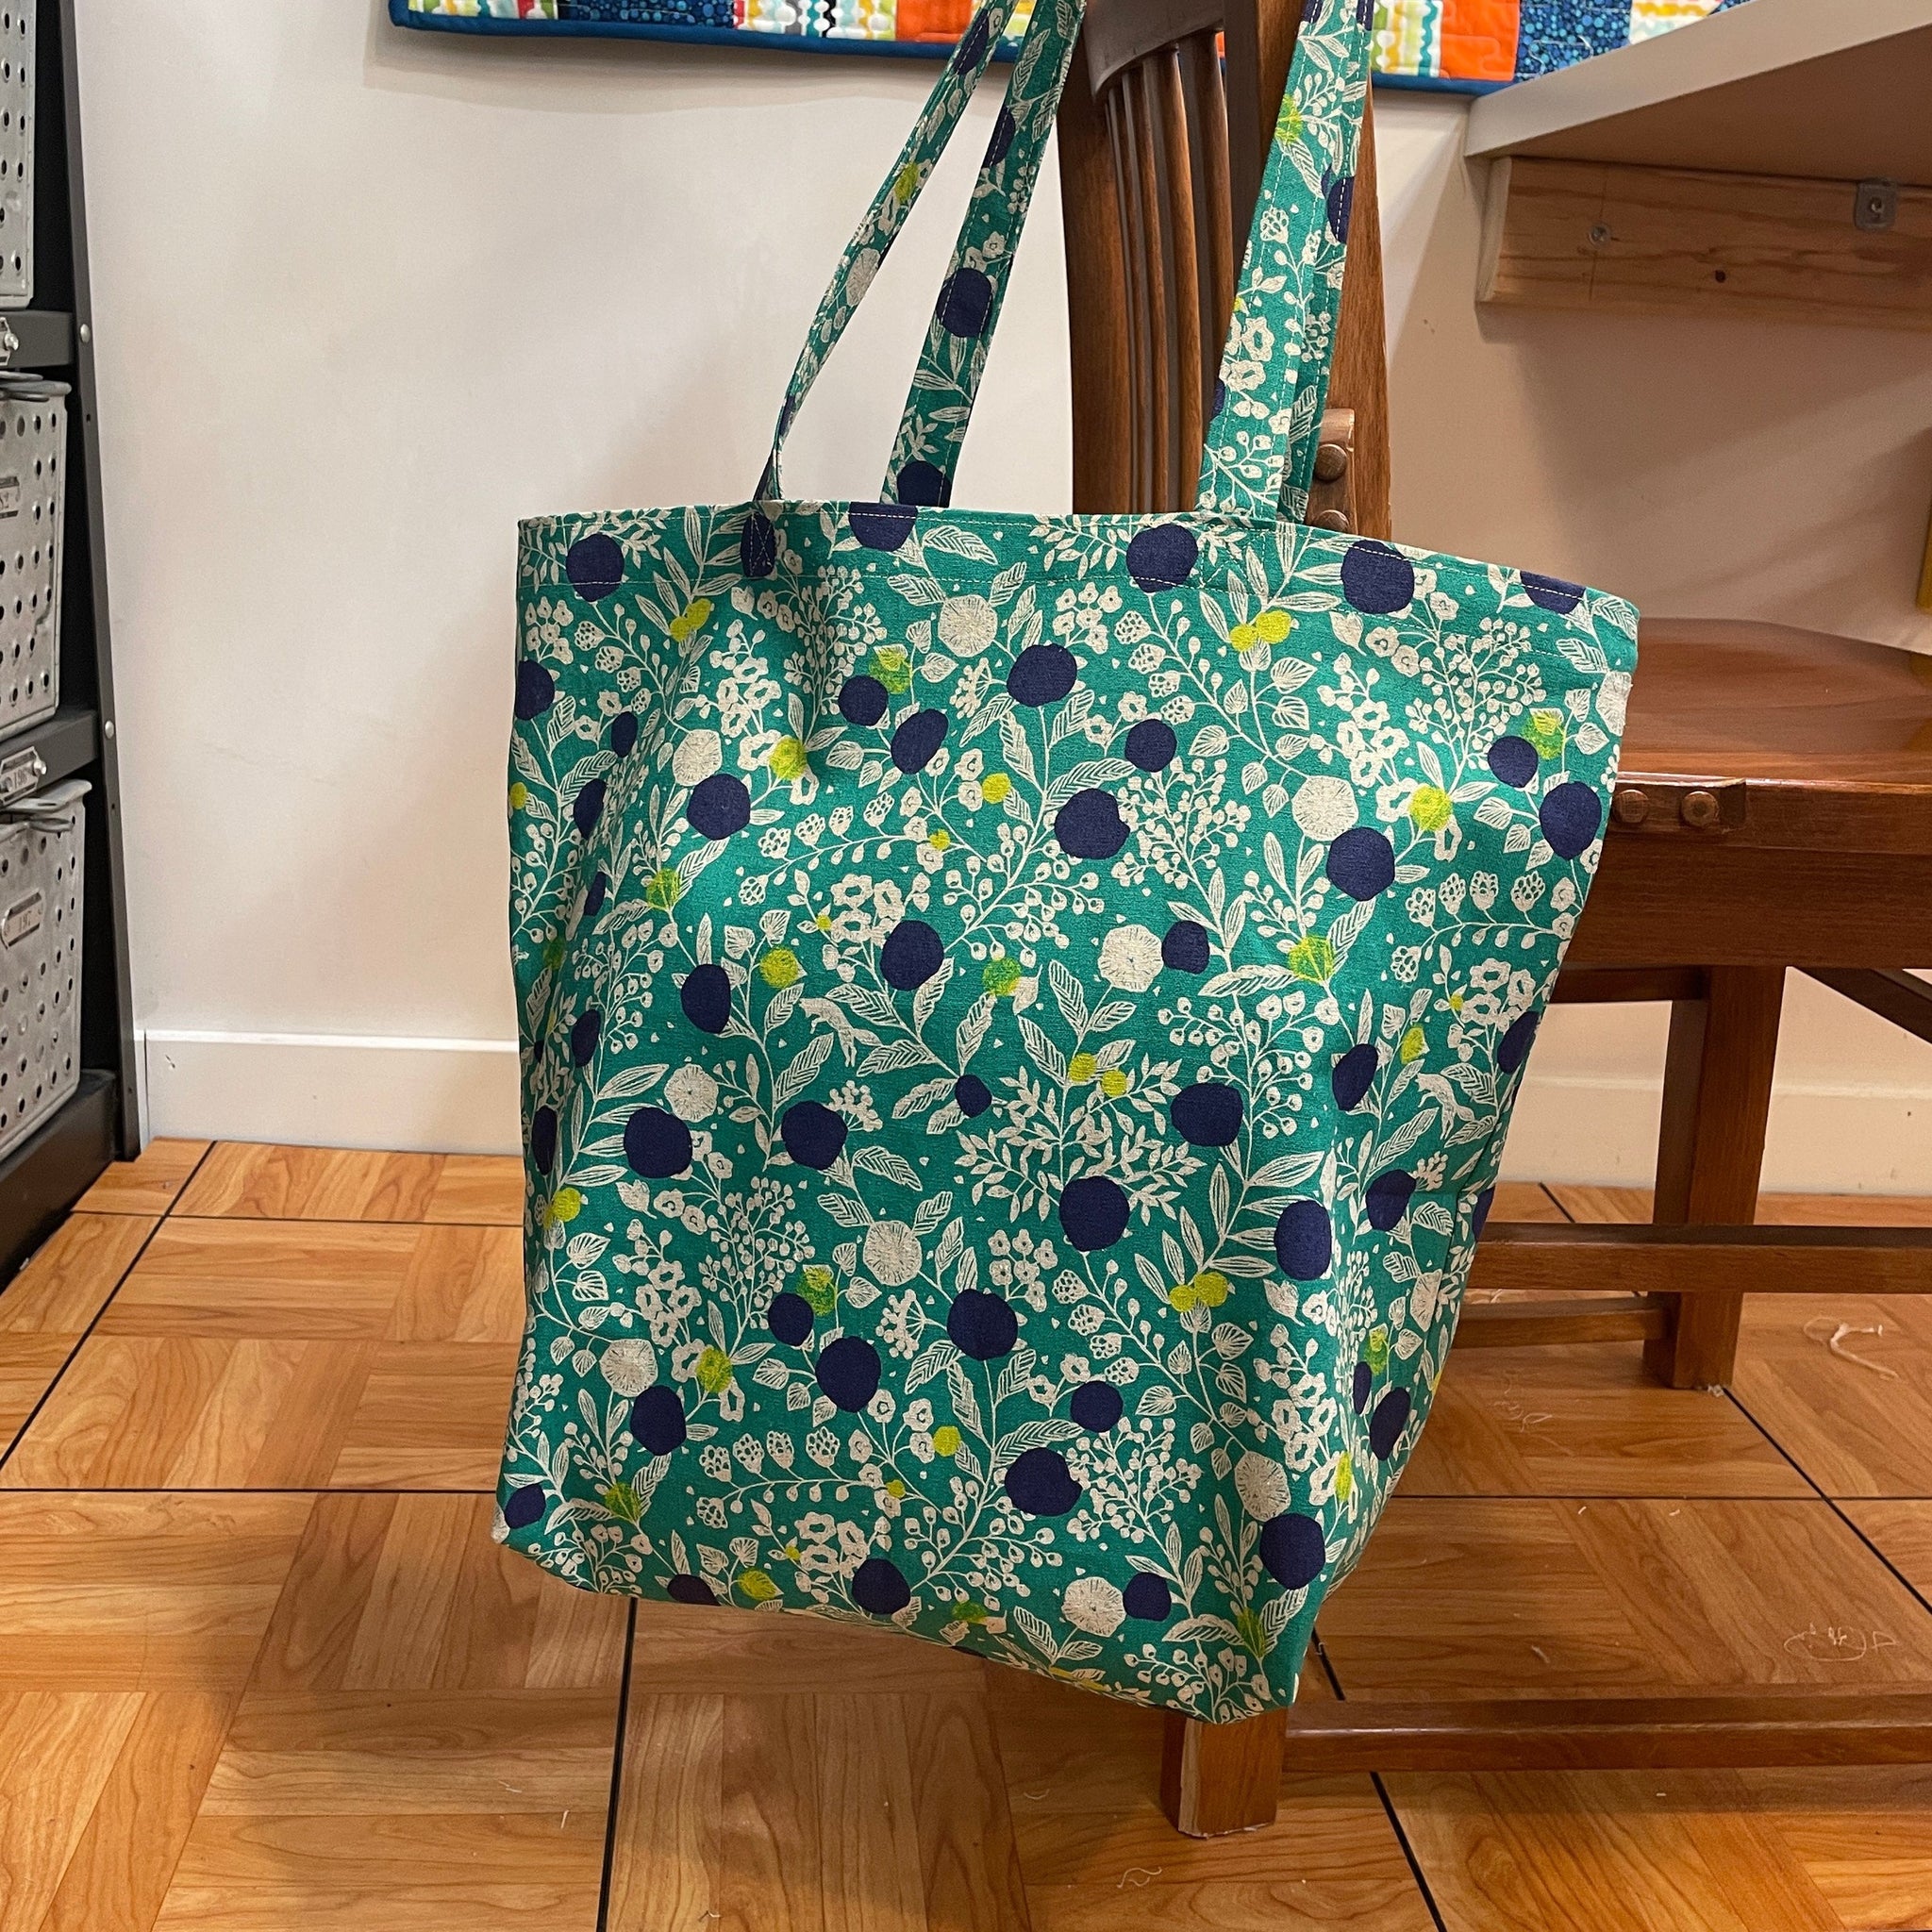 Buy Jute Grocery Bag, Promotional Jute Bags online from $0.99